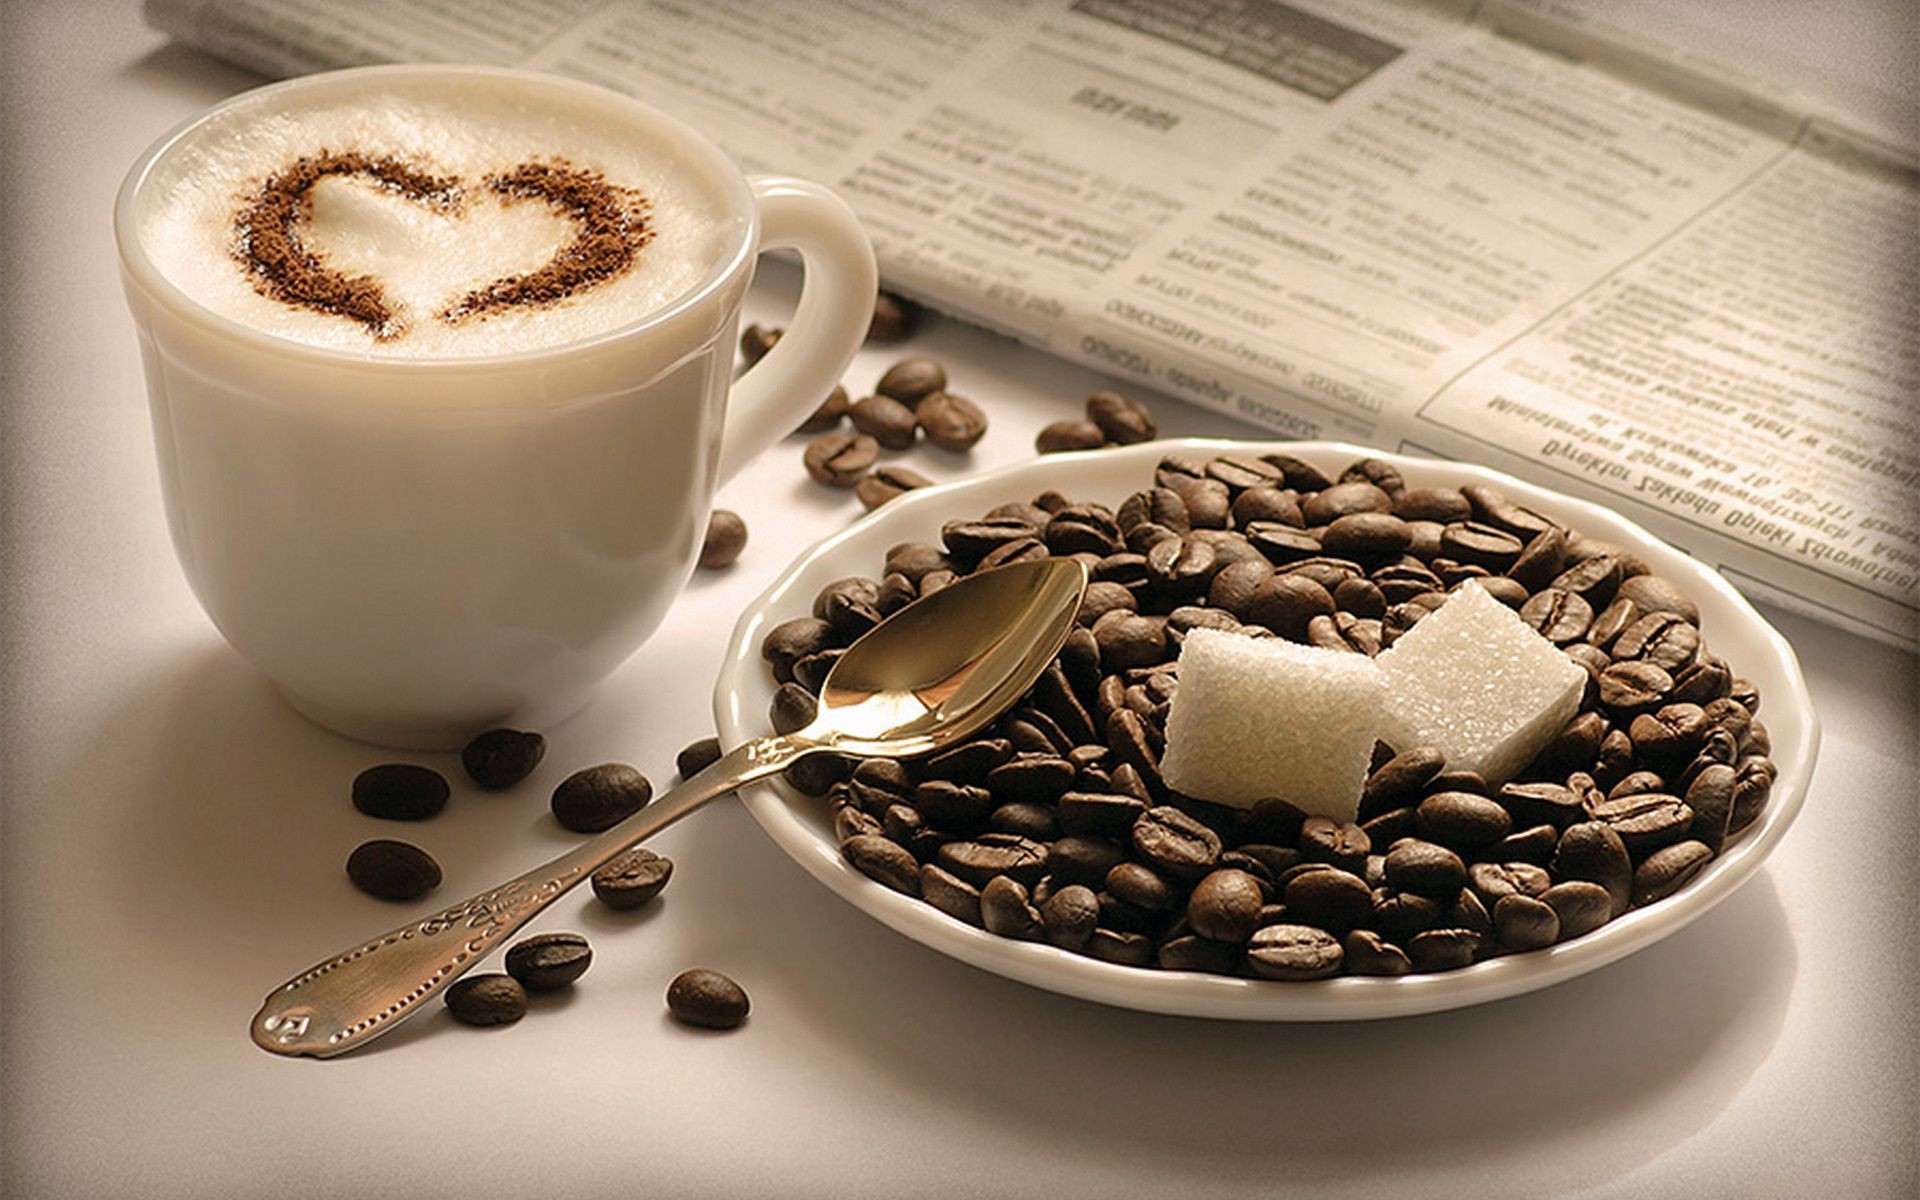 coffee espresso caffeine dawn drink cup breakfast cappuccino bean foam dark mug mocha perfume hot saucer milk break spoon